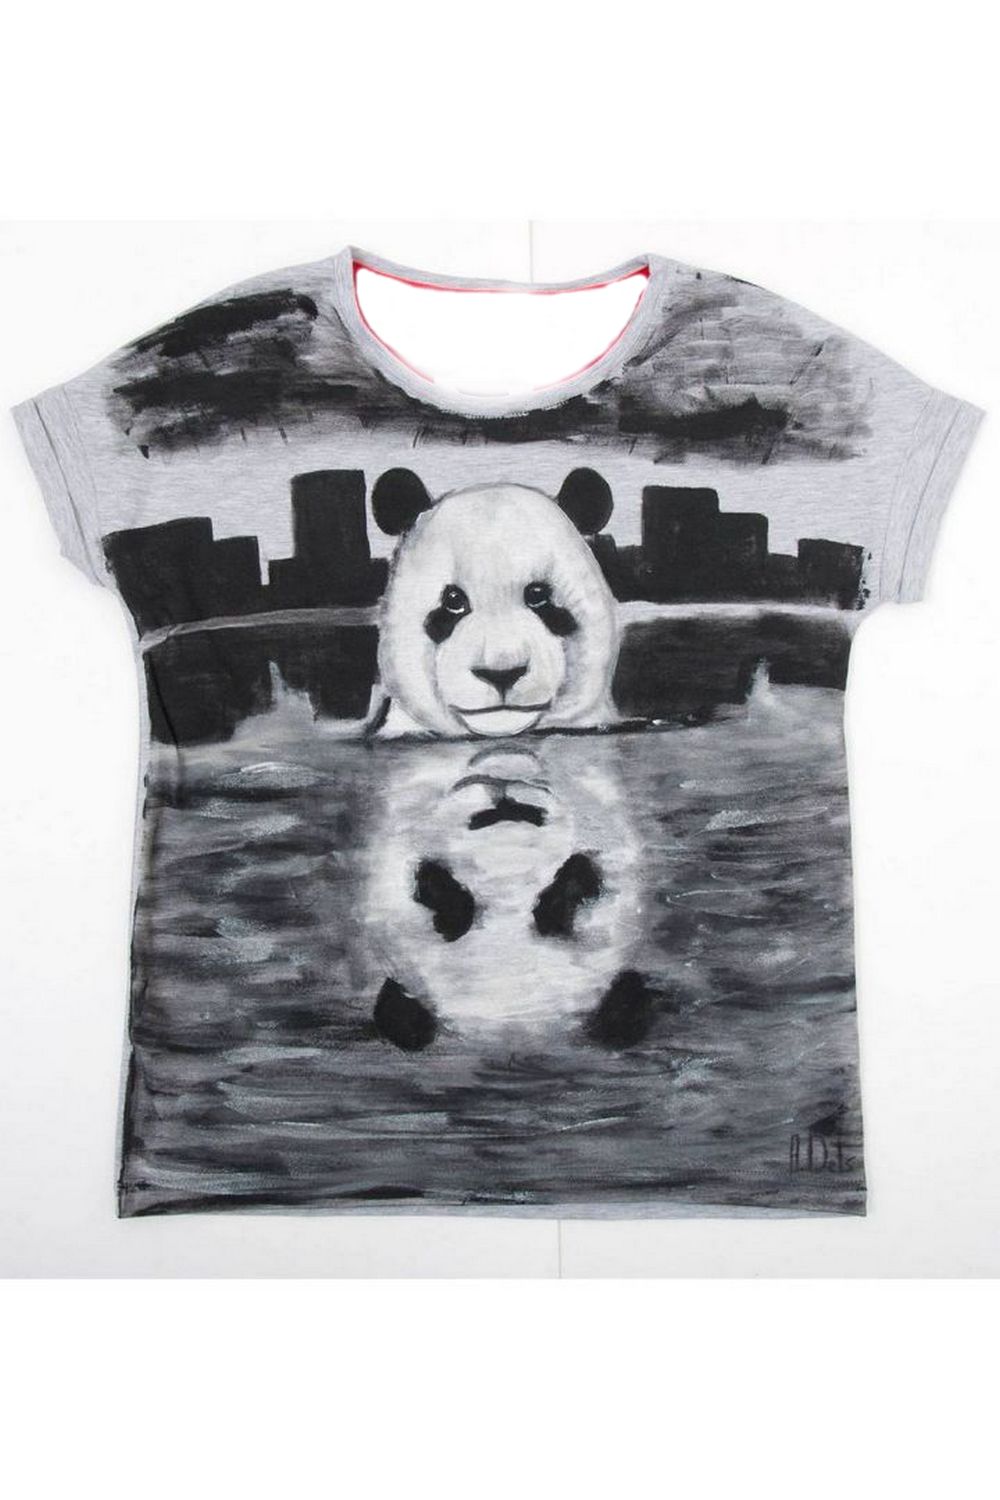 Buy Women Gray Cotton Print tee shirt , Short sleeve Panda tshirt, Unique stylish t shirt